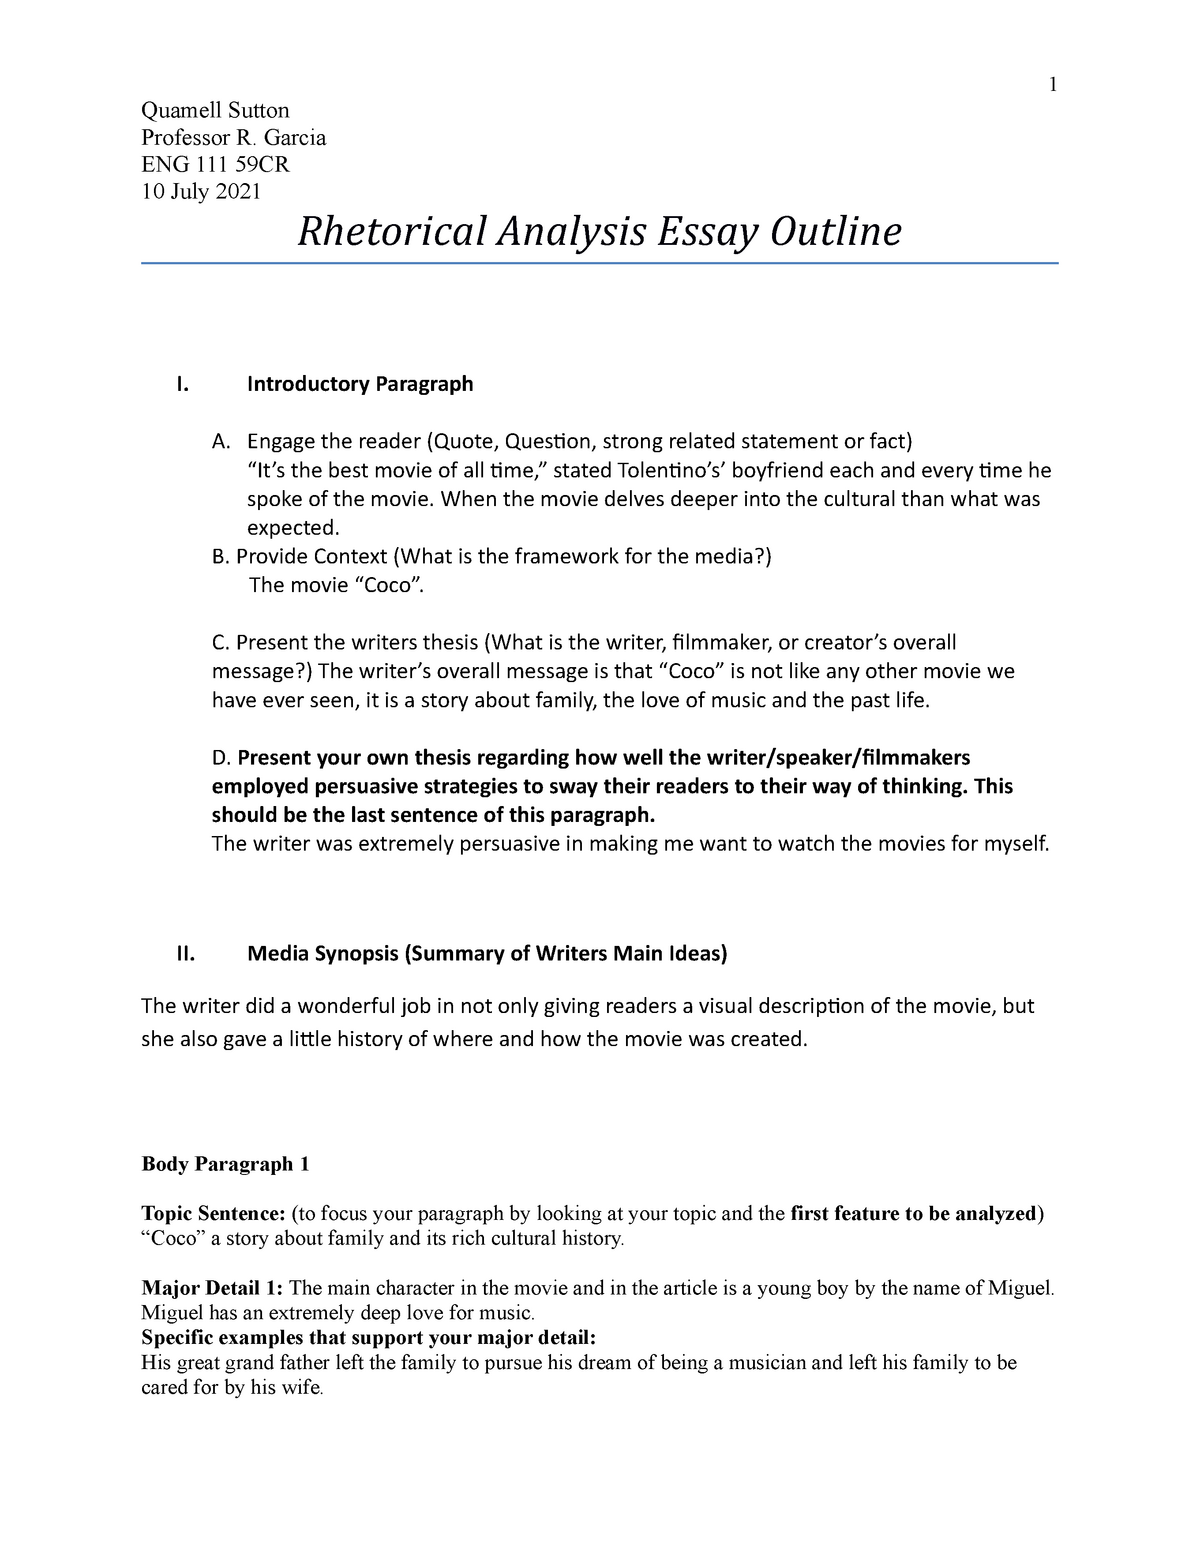 how to write an rhetorical analysis essay